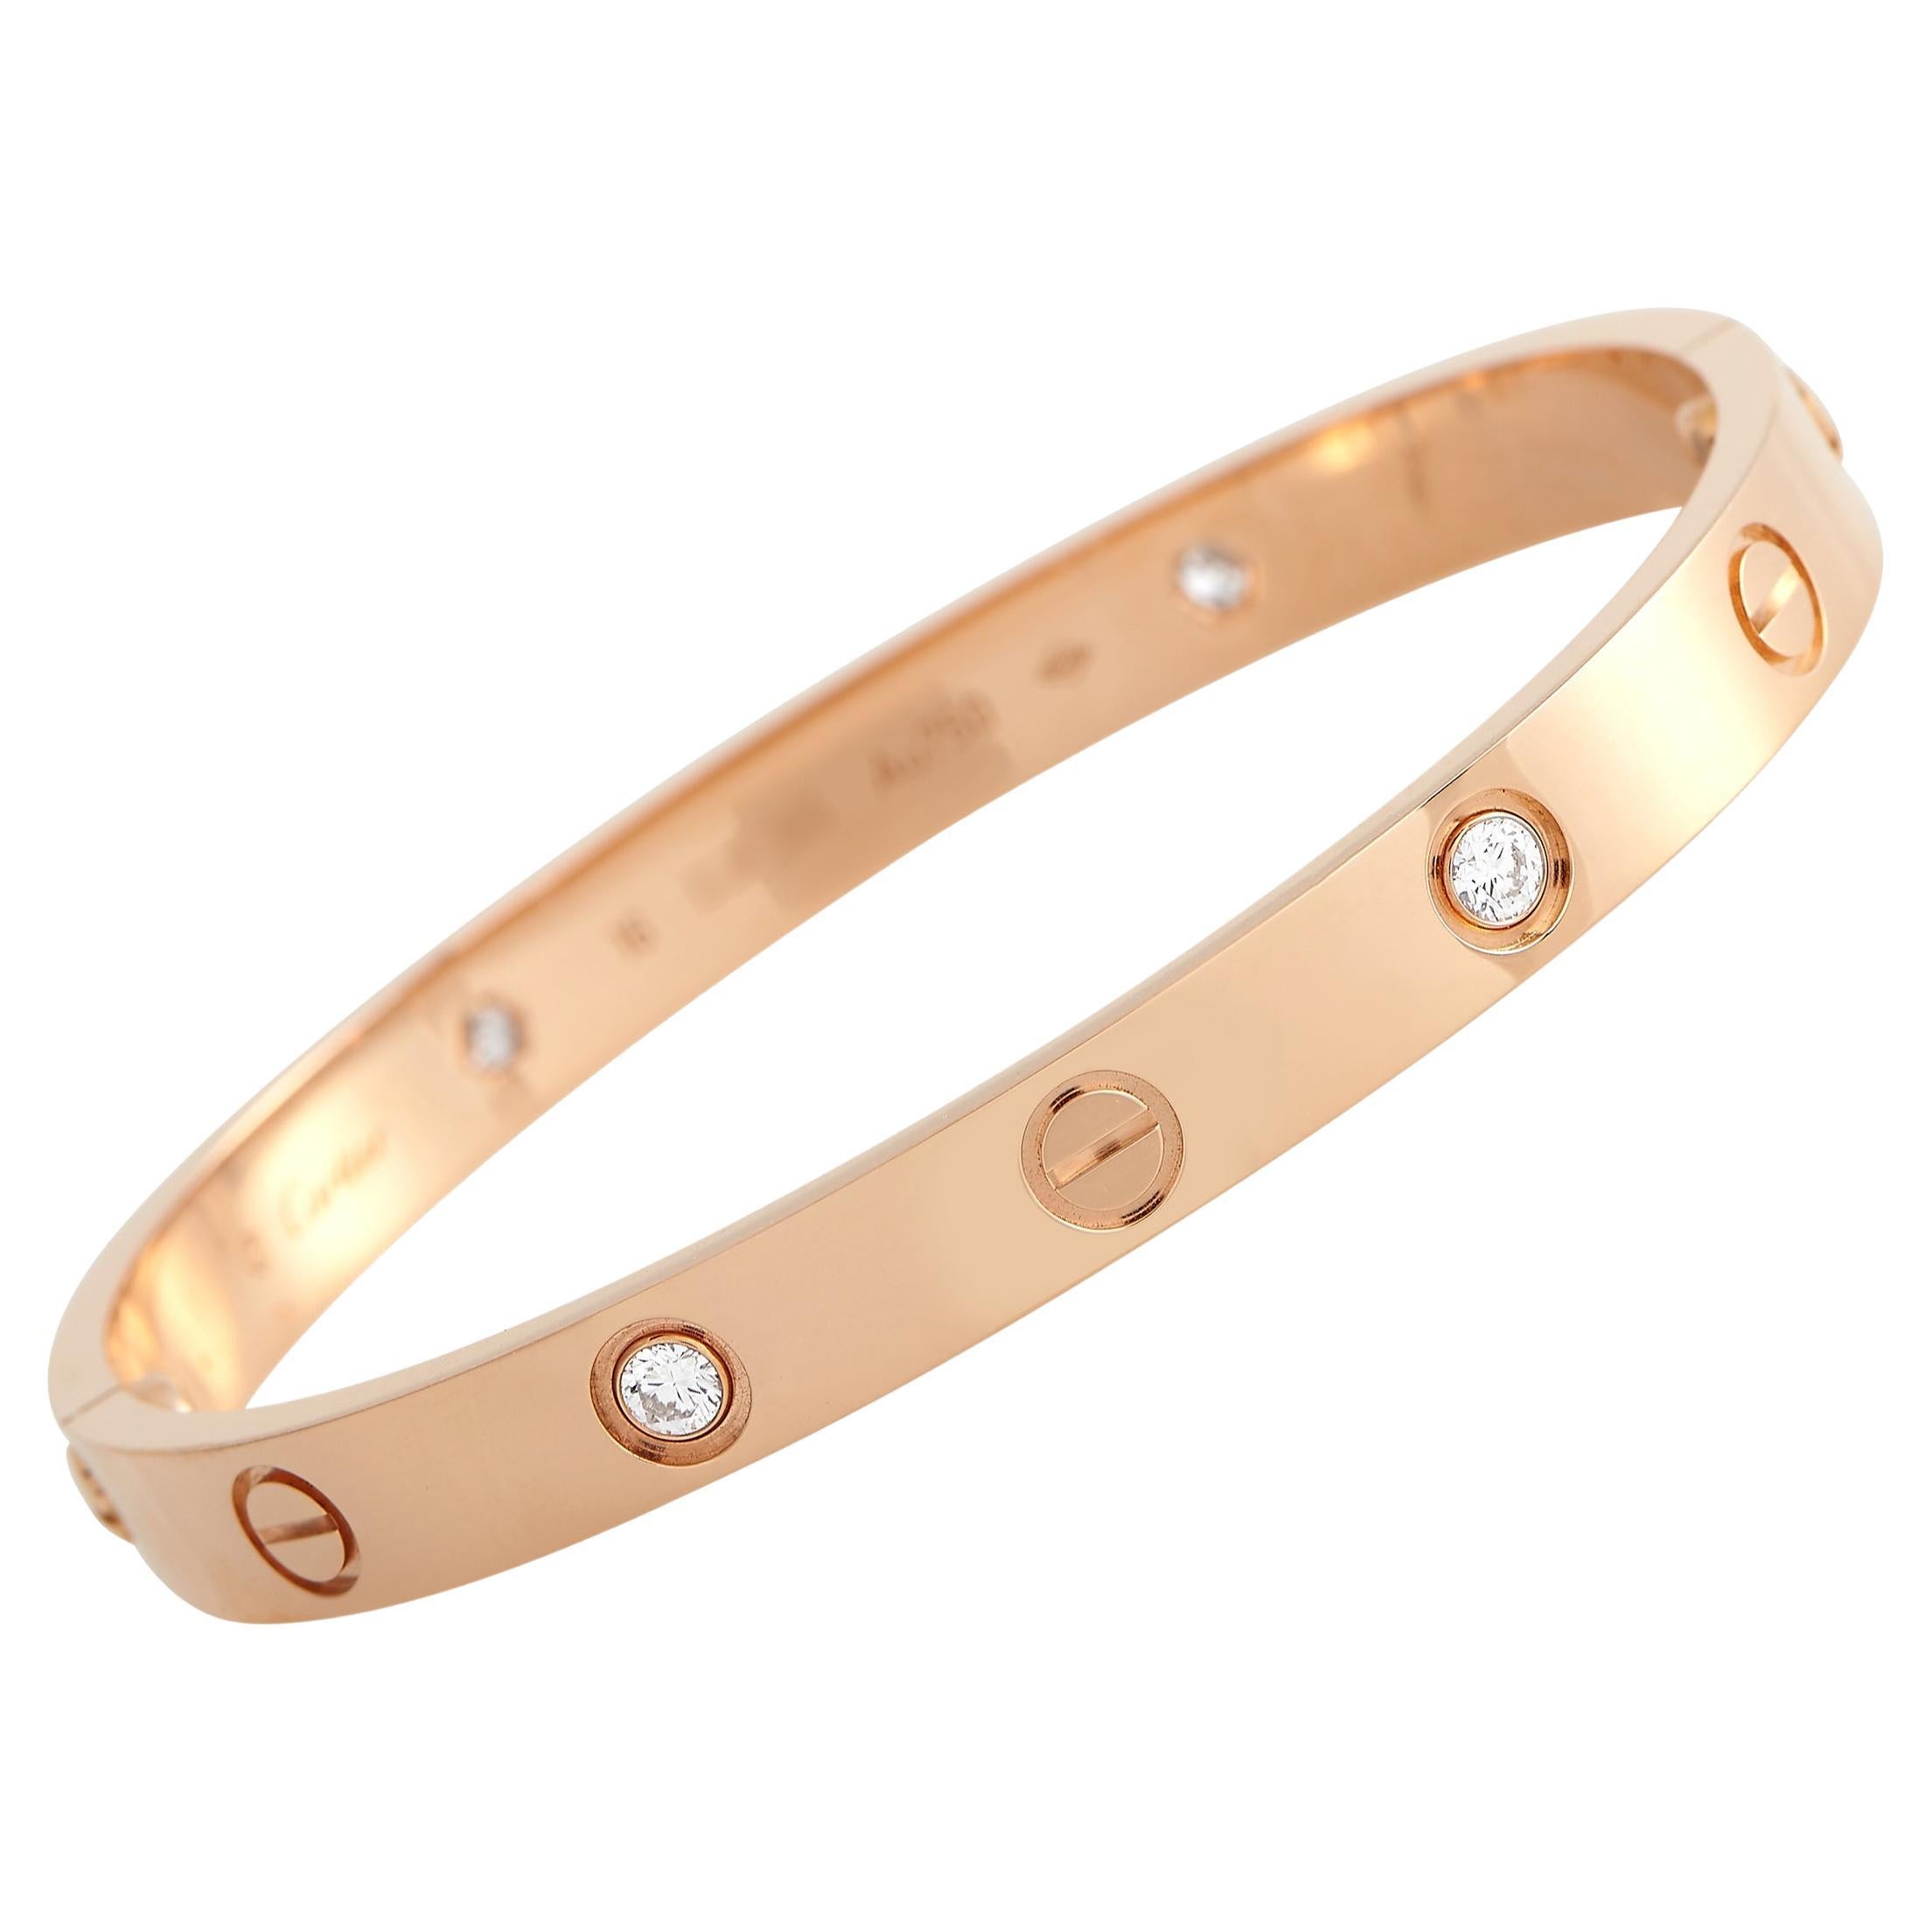 AoJun Love Bracelet 18K Gold Plated CZ Stainless Steel with Crystal Bangle Bracelets for Women Girls Jewelry 